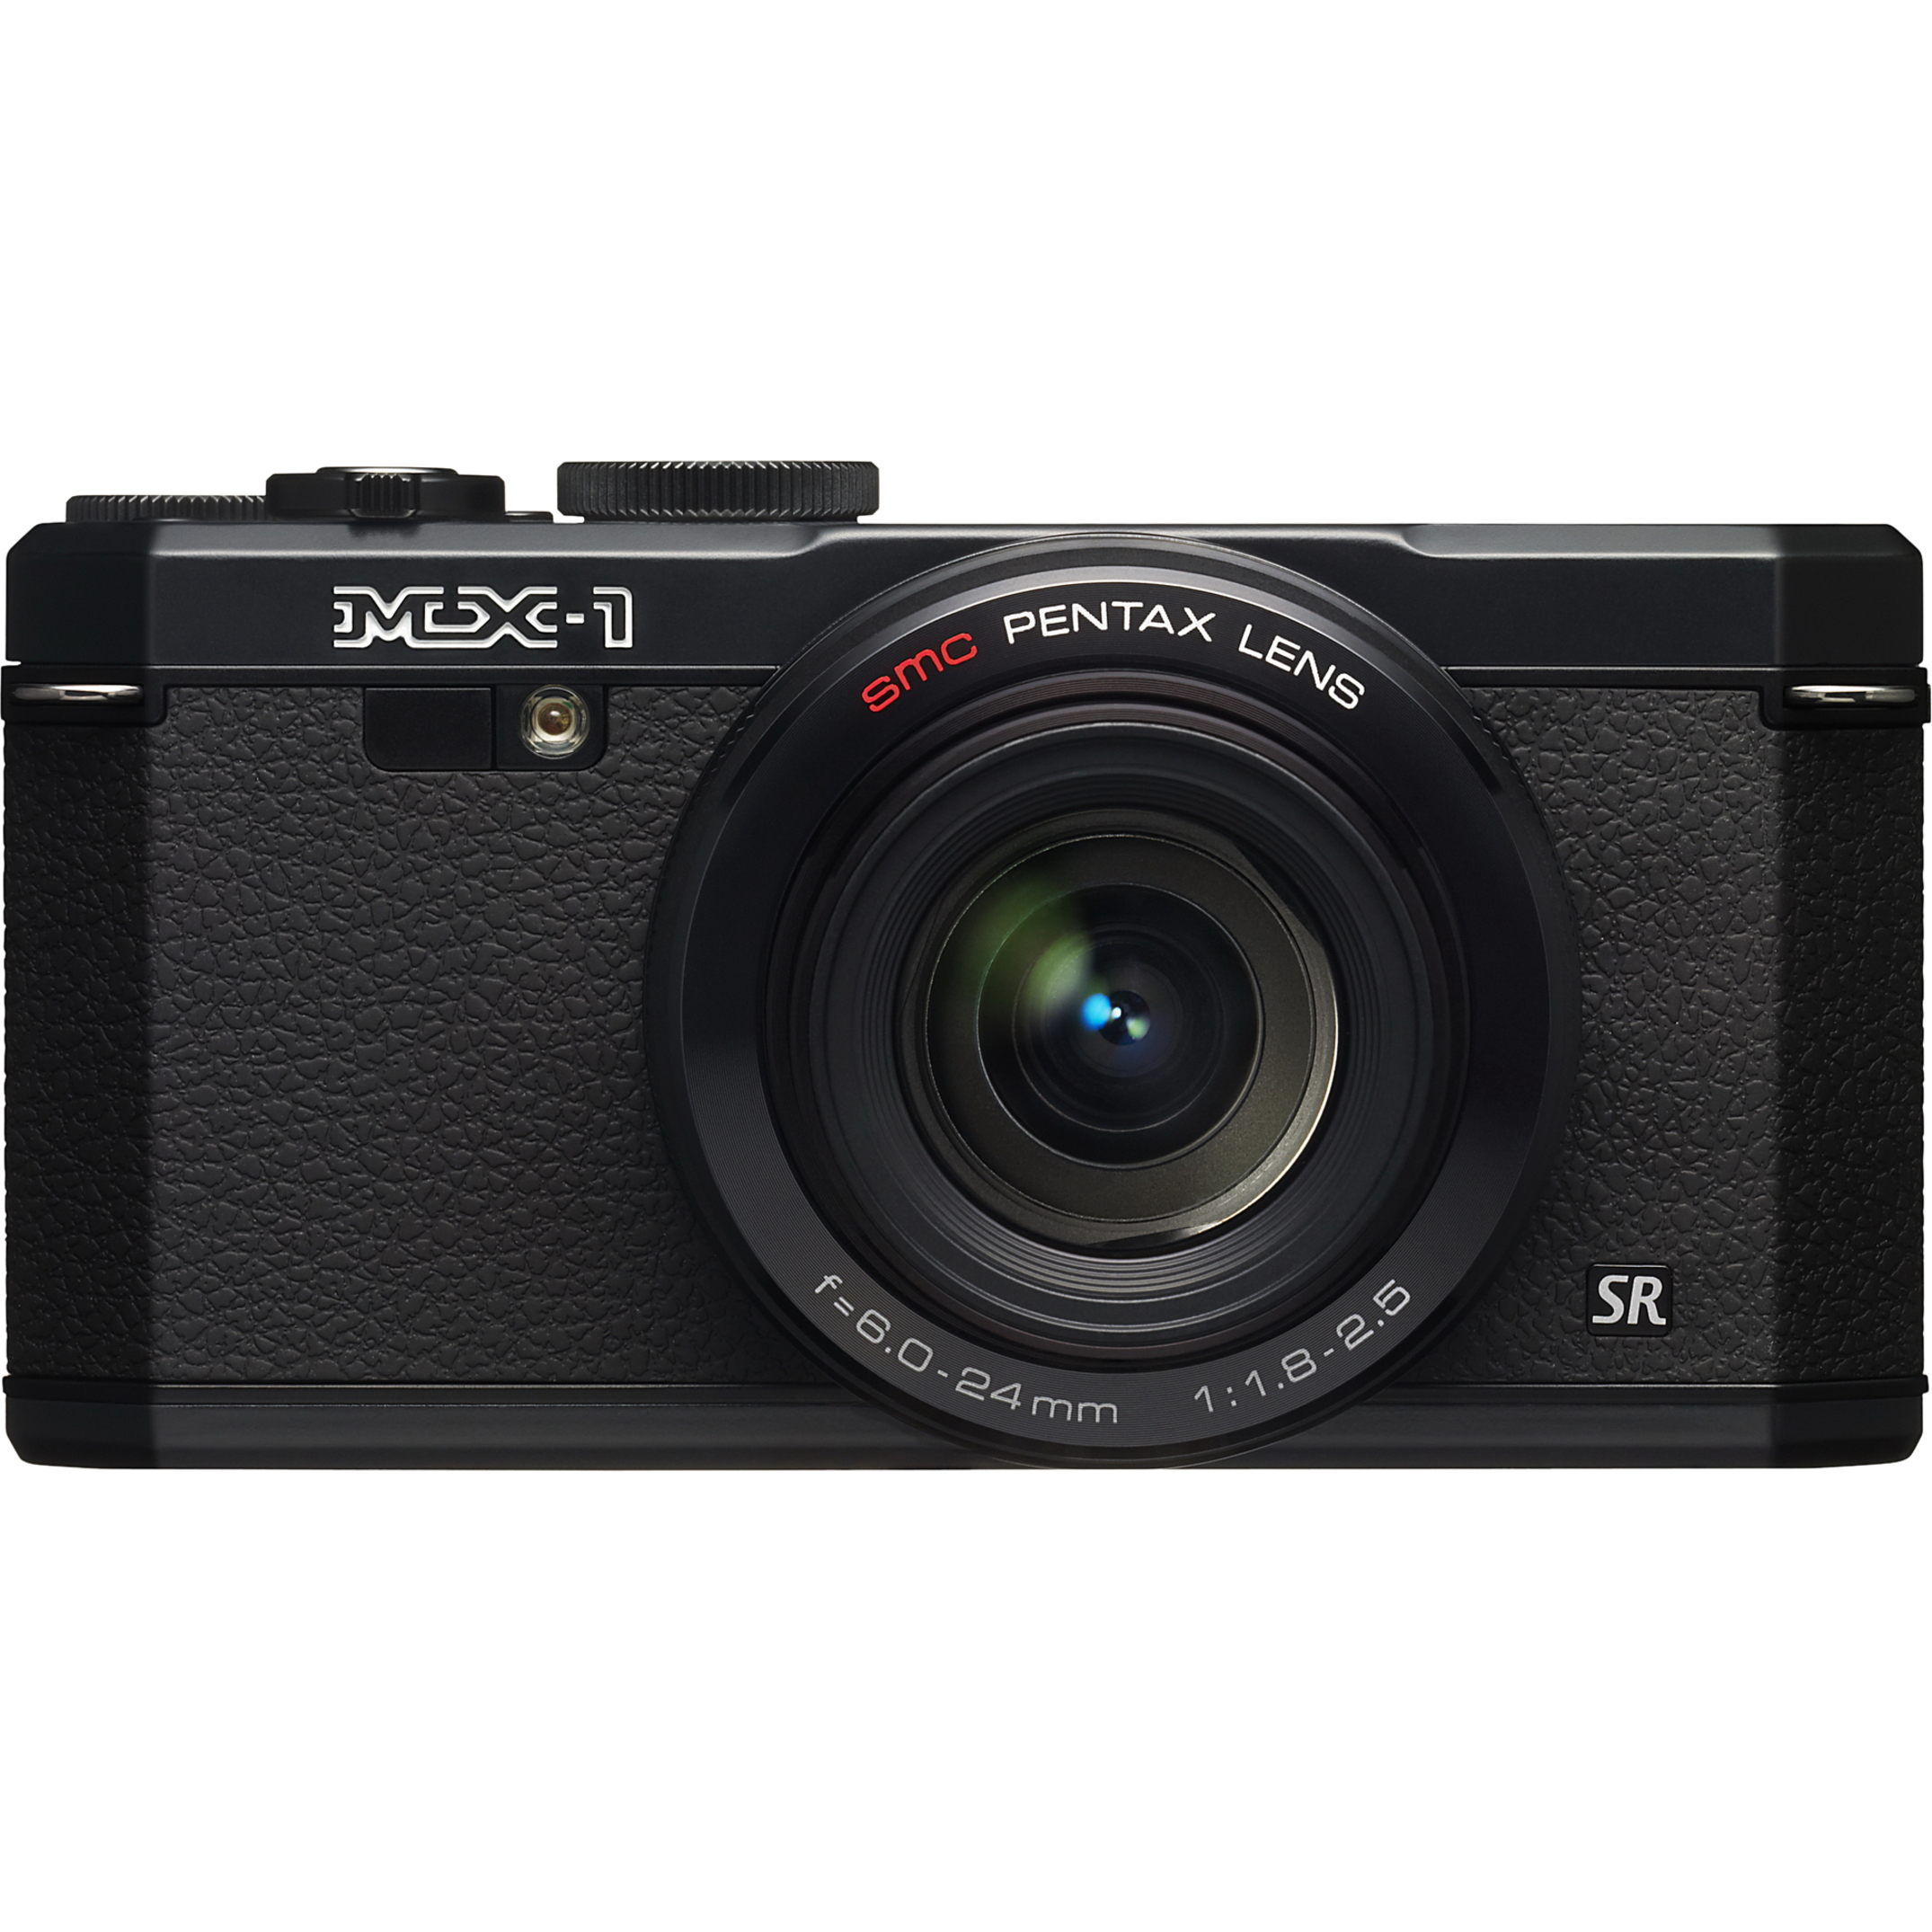 Pentax MX-1 12 Megapixel Compact Camera, Black - image 4 of 6